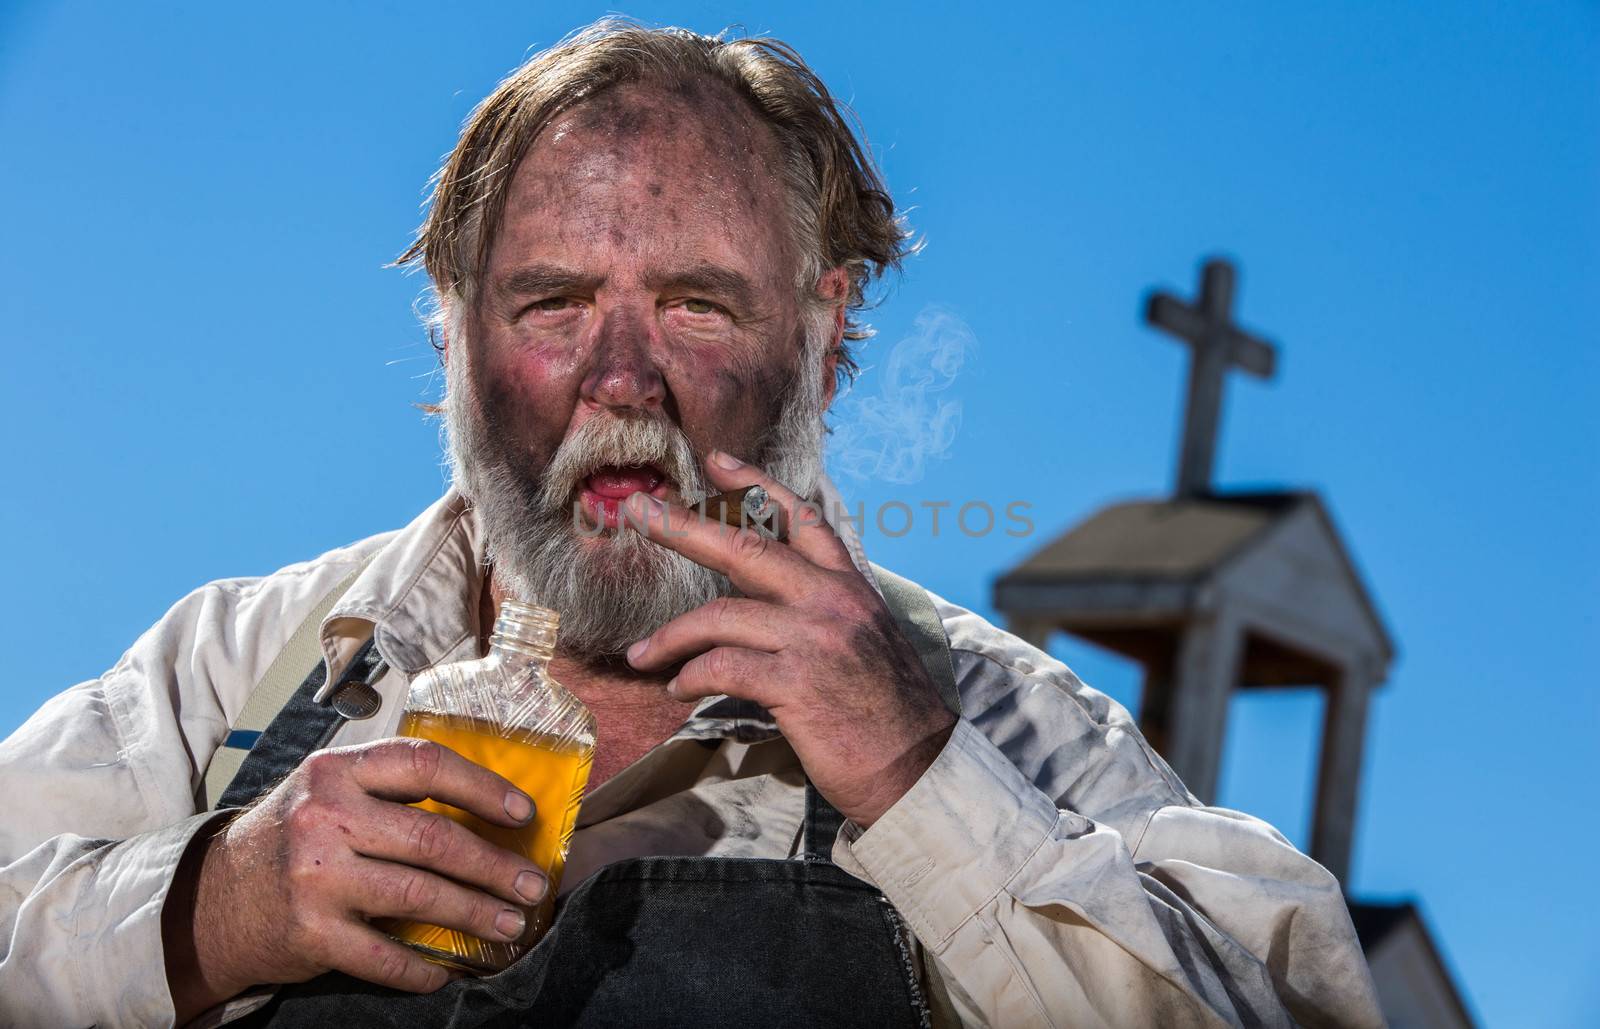 Old West Drunk Drinks Flask